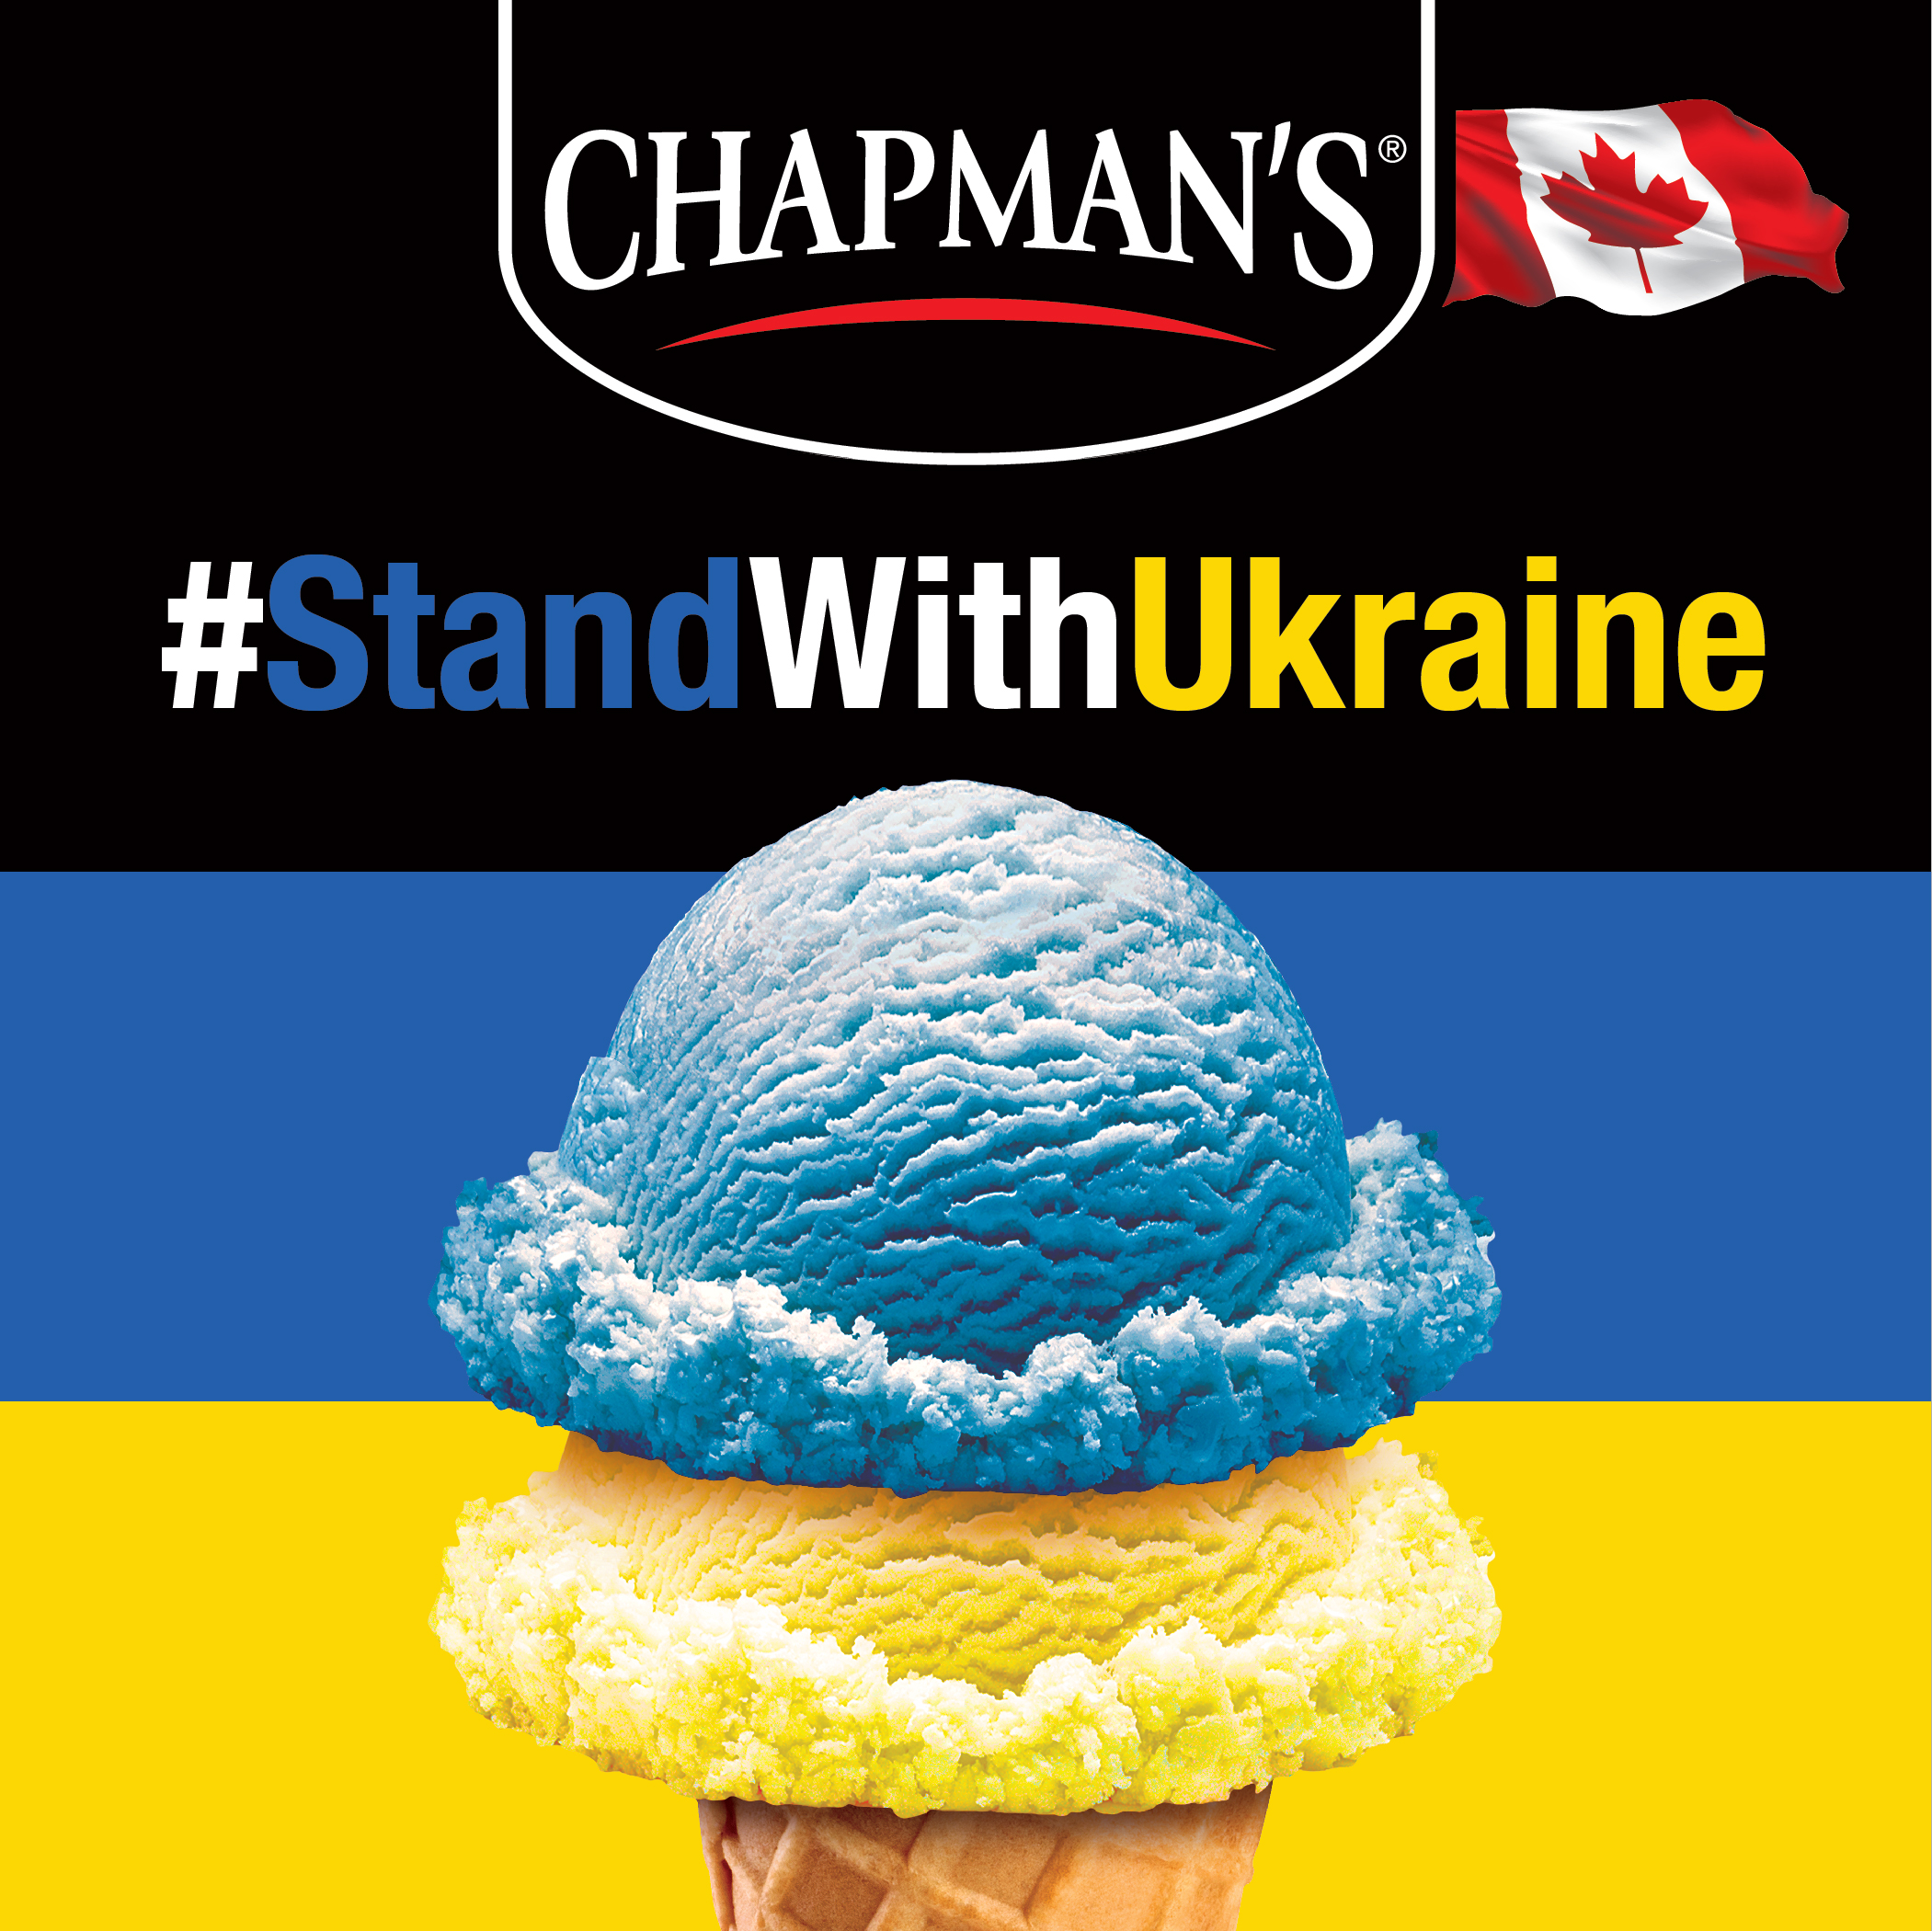 Chapman's Ice Cream on X: We #StandWithUkraine. Ukraine needs our